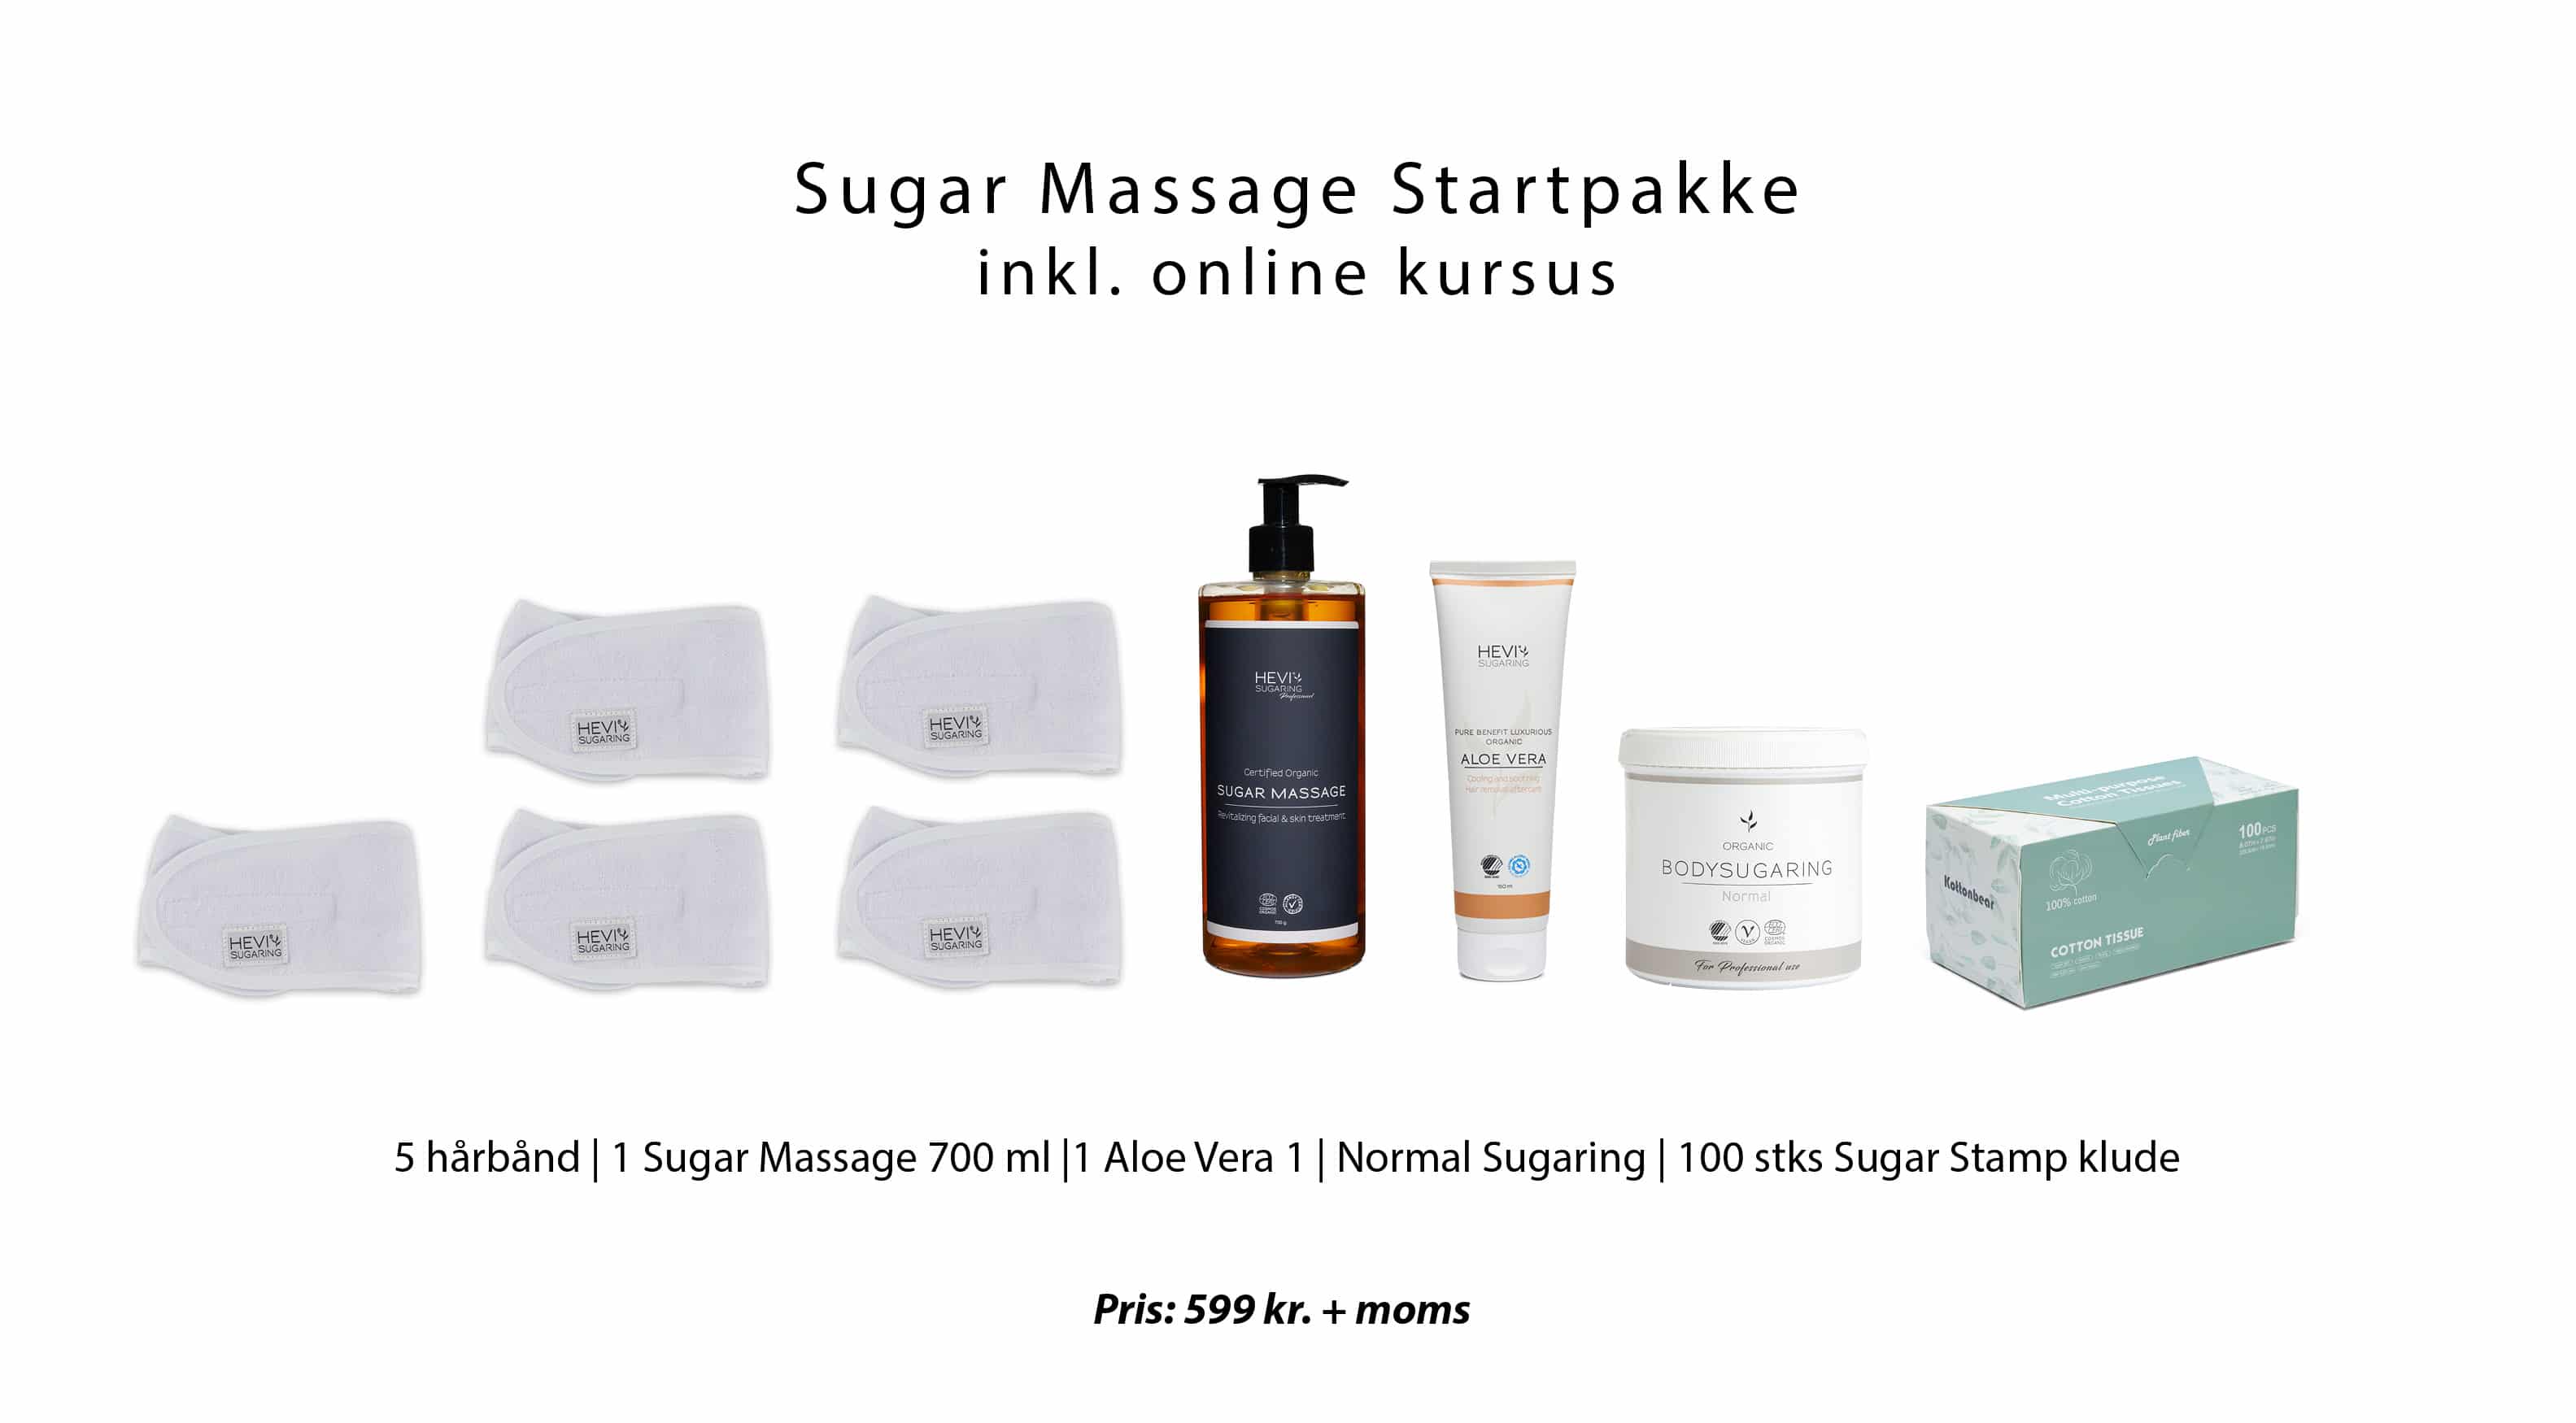 Sugar Massage Startpakke Inkl. Online Kursus